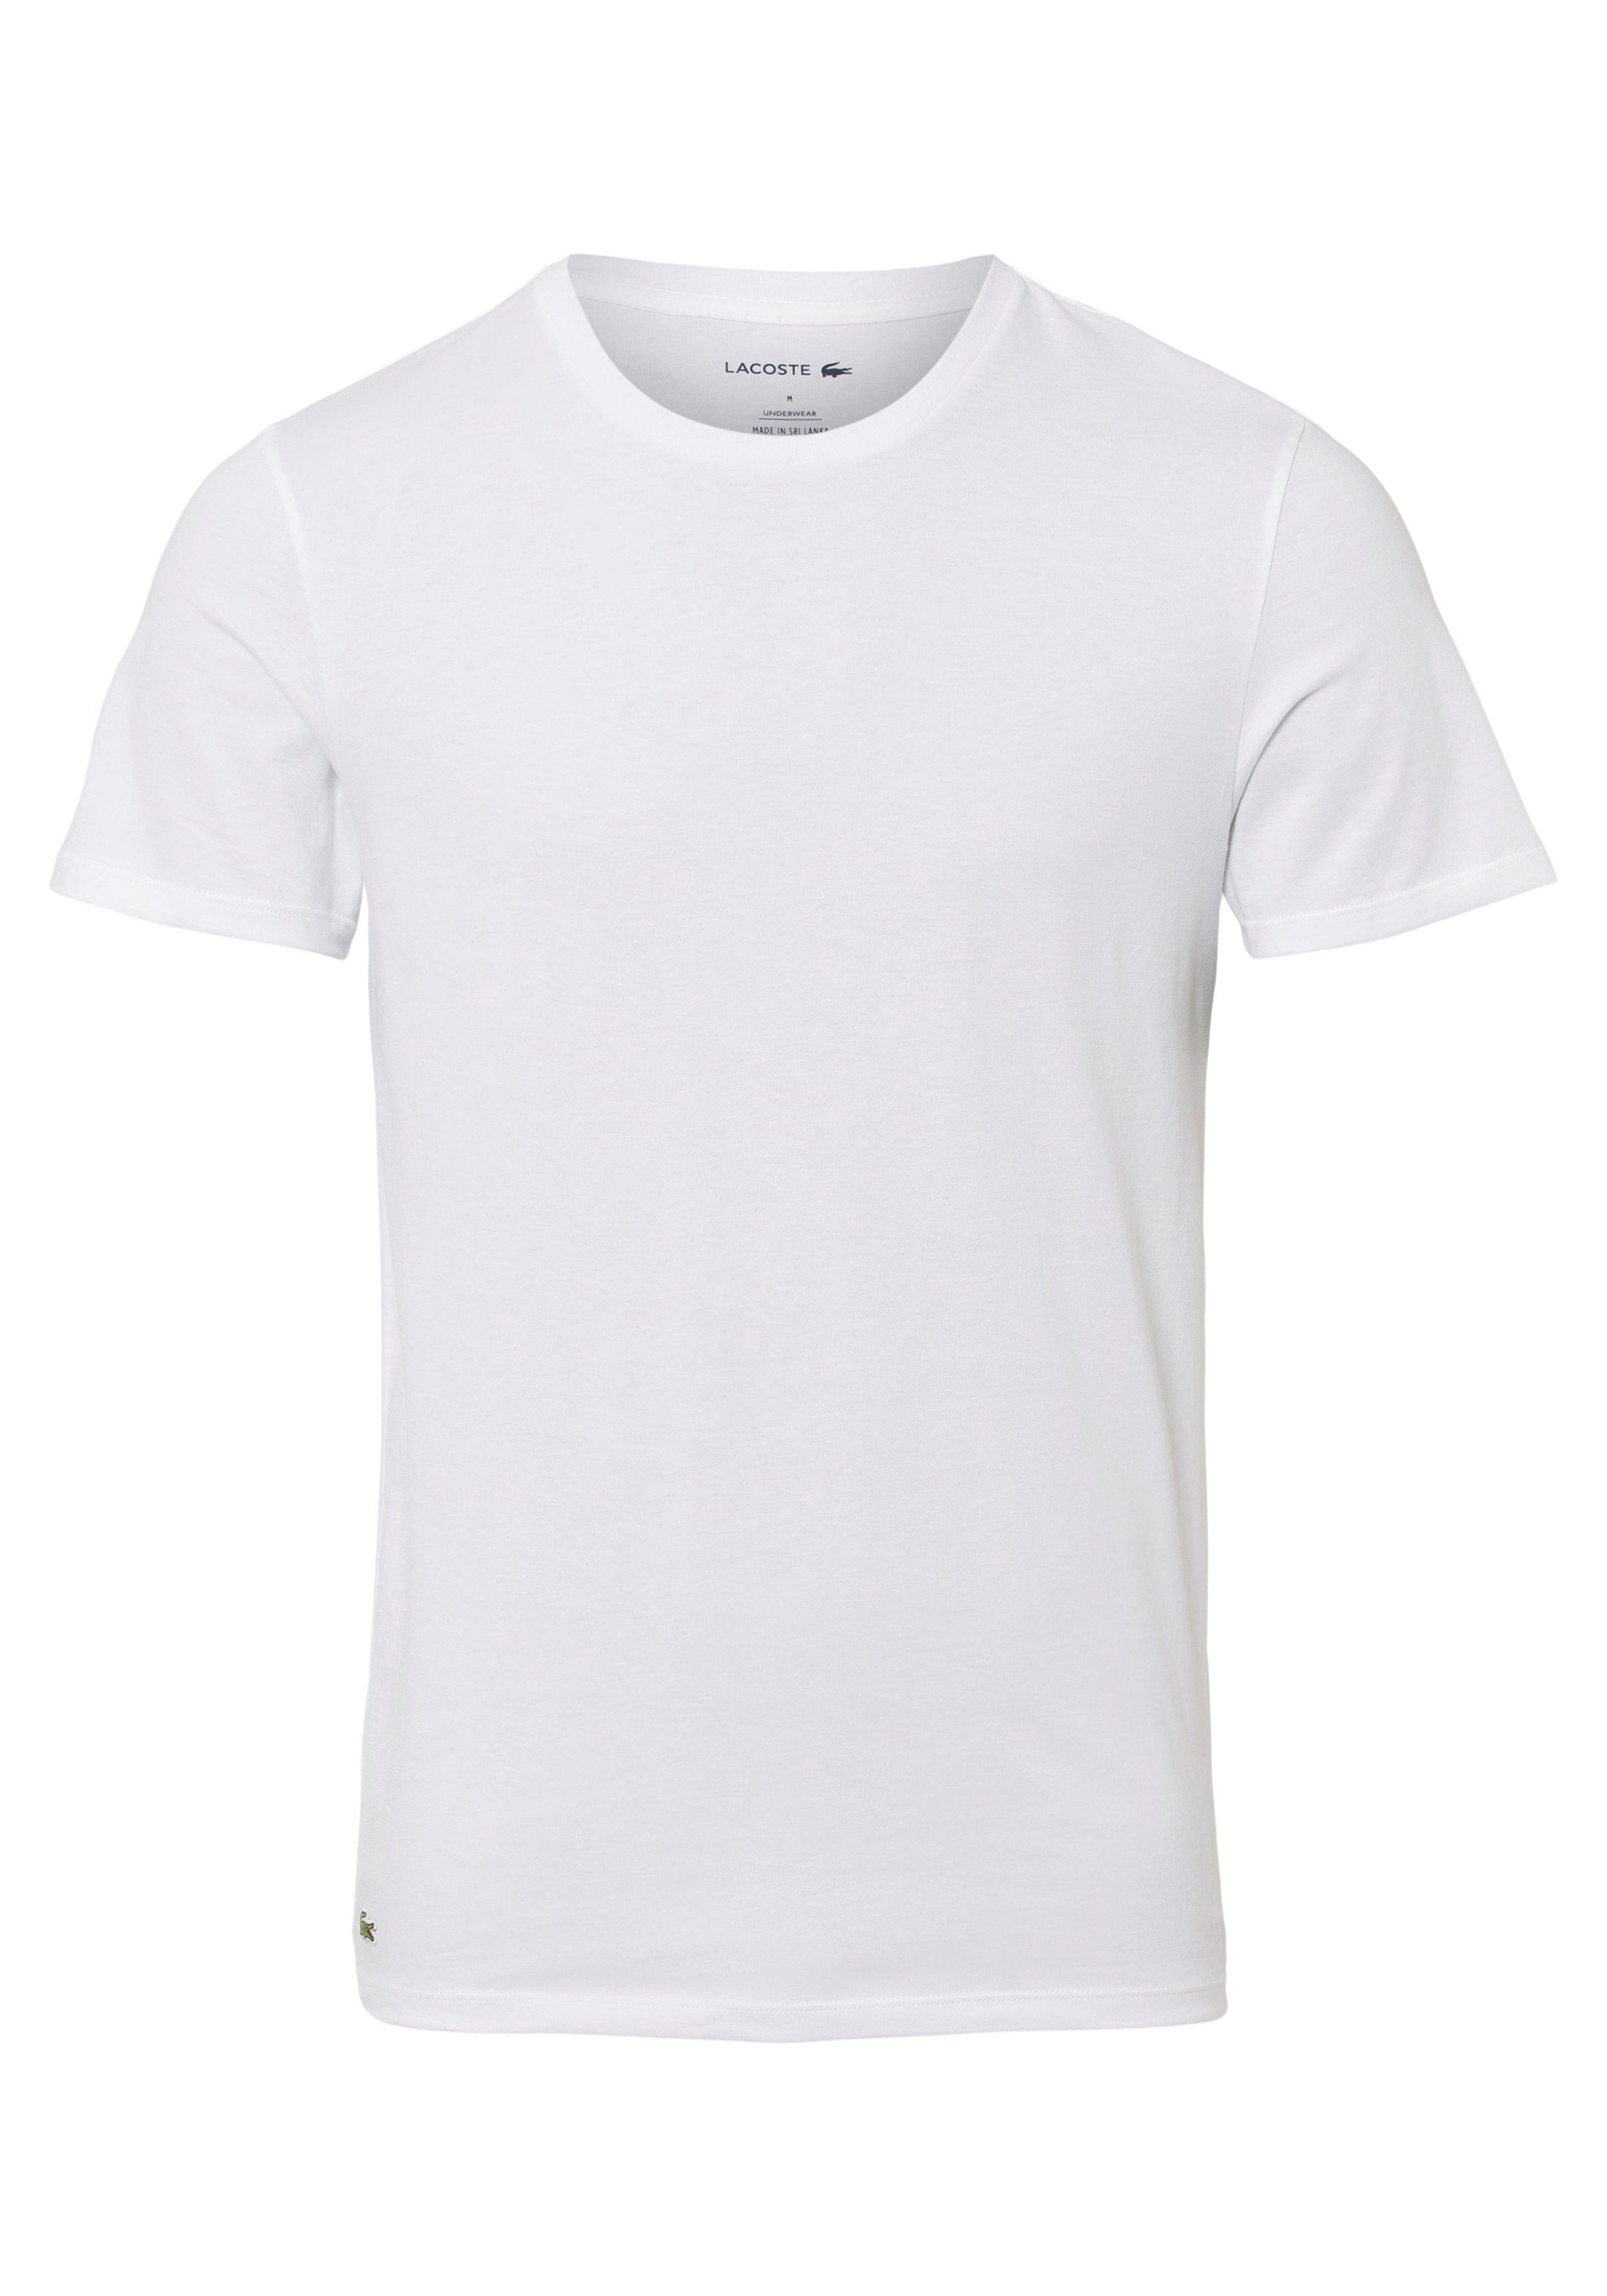 Lacoste T-Shirt (3er-Pack) Atmungsaktives Baumwollmaterial für angenehmes Hautgefühl weiß